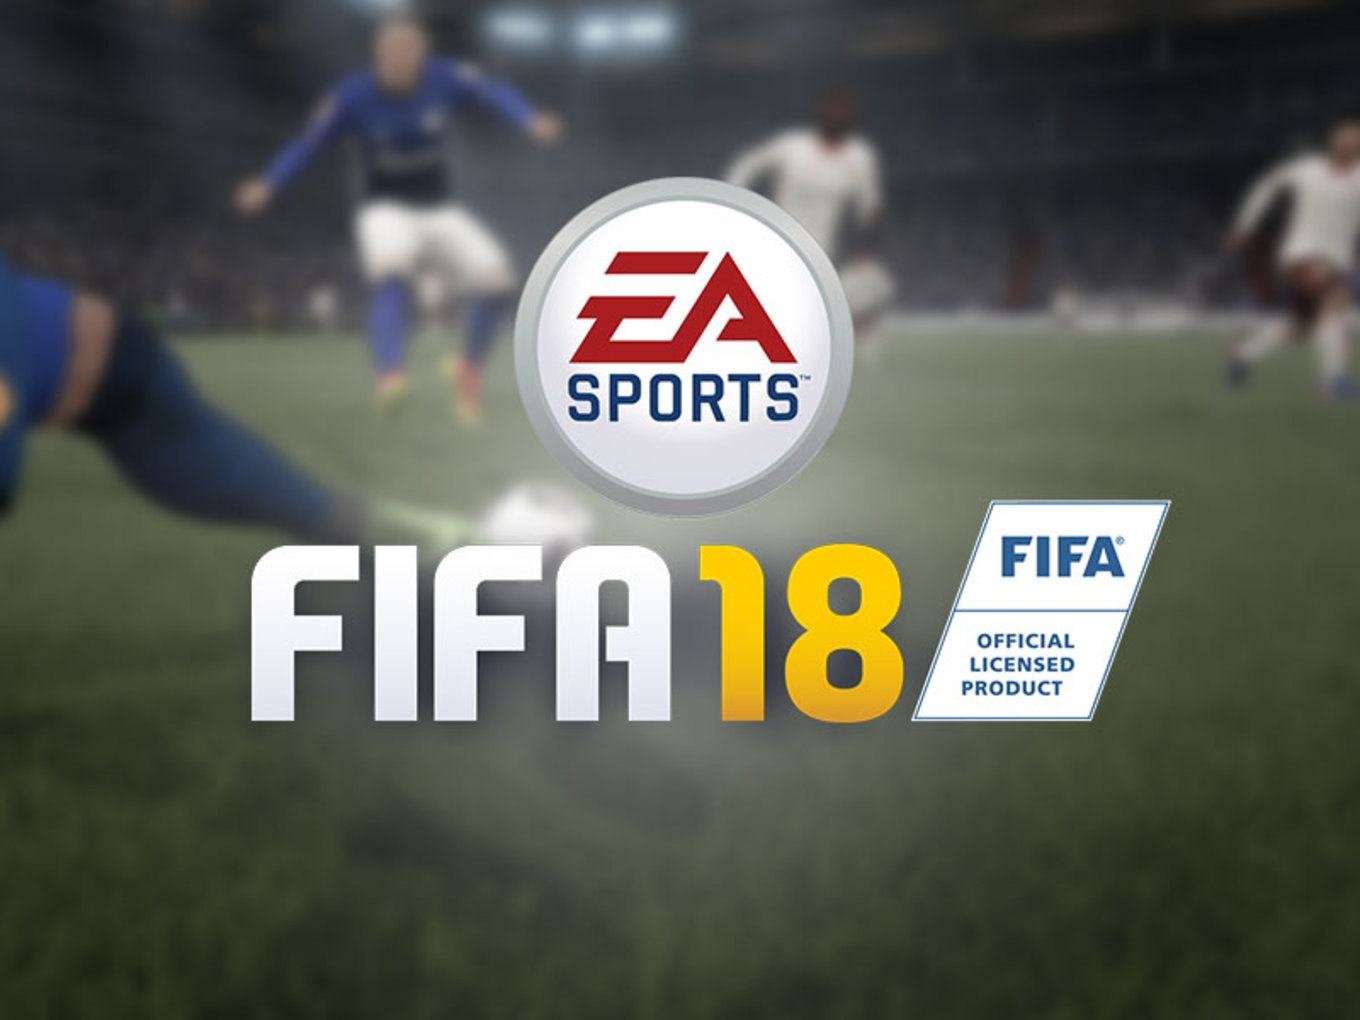 Fifa без origin. Логотип ФИФА 18. FIFA 18 логотип. FIFA 18 logo.